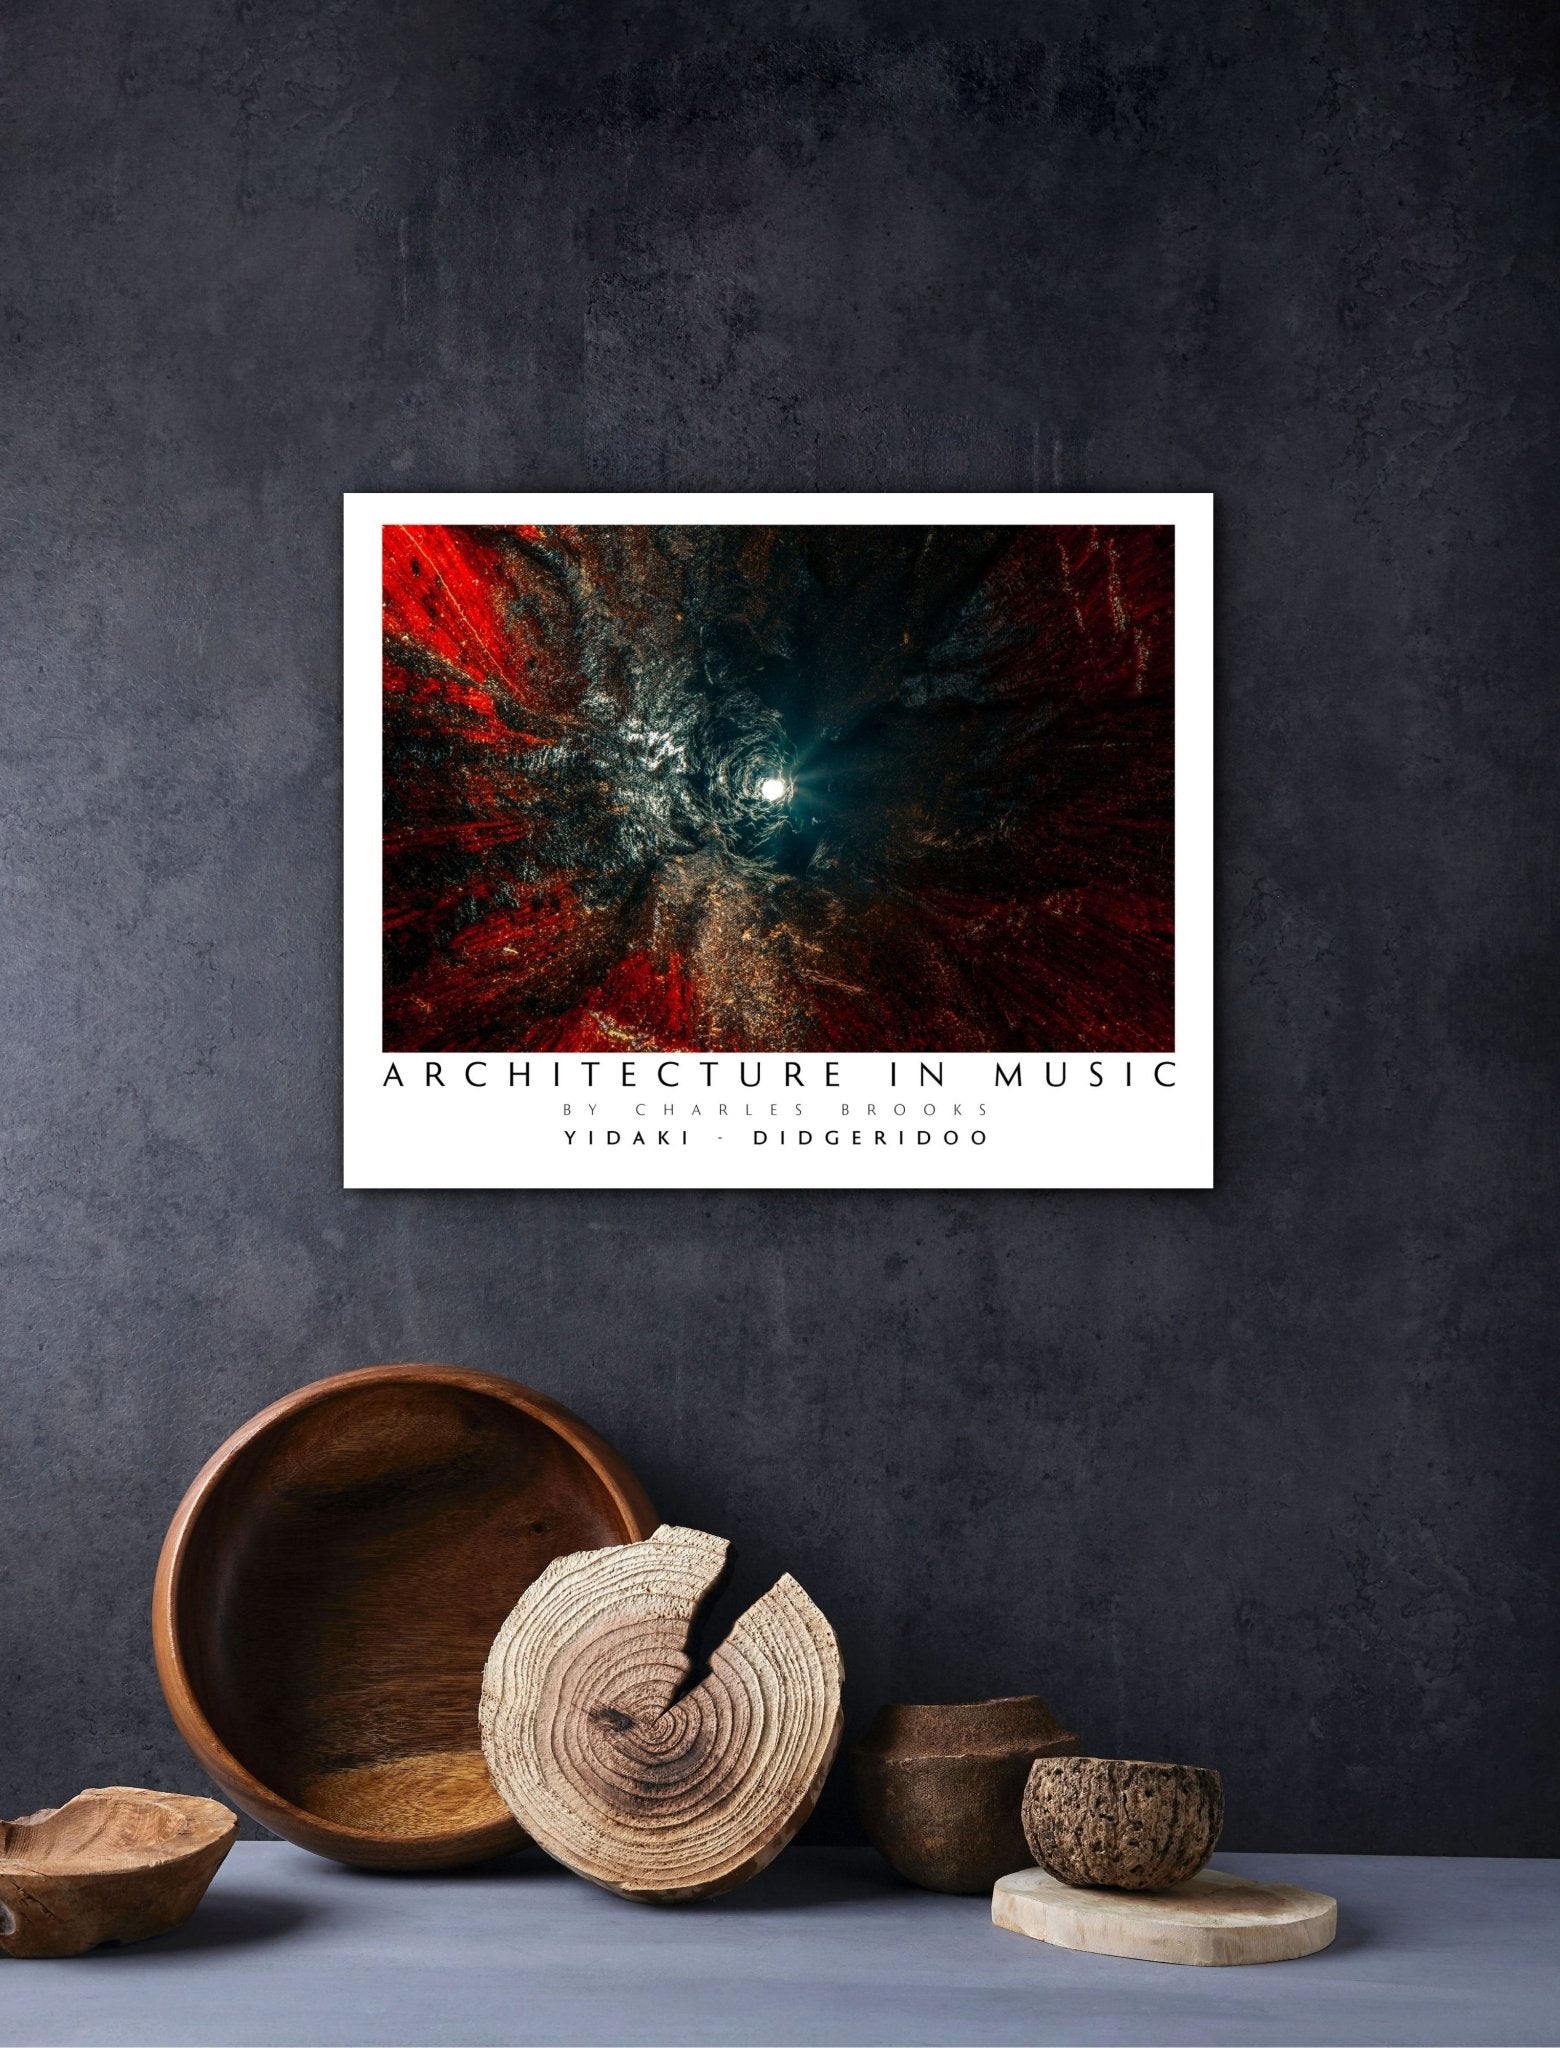 Photo of Australian Yidaki / Didgeridoo. High Quality Poster. - Giclée Poster Print - Architecture In Music